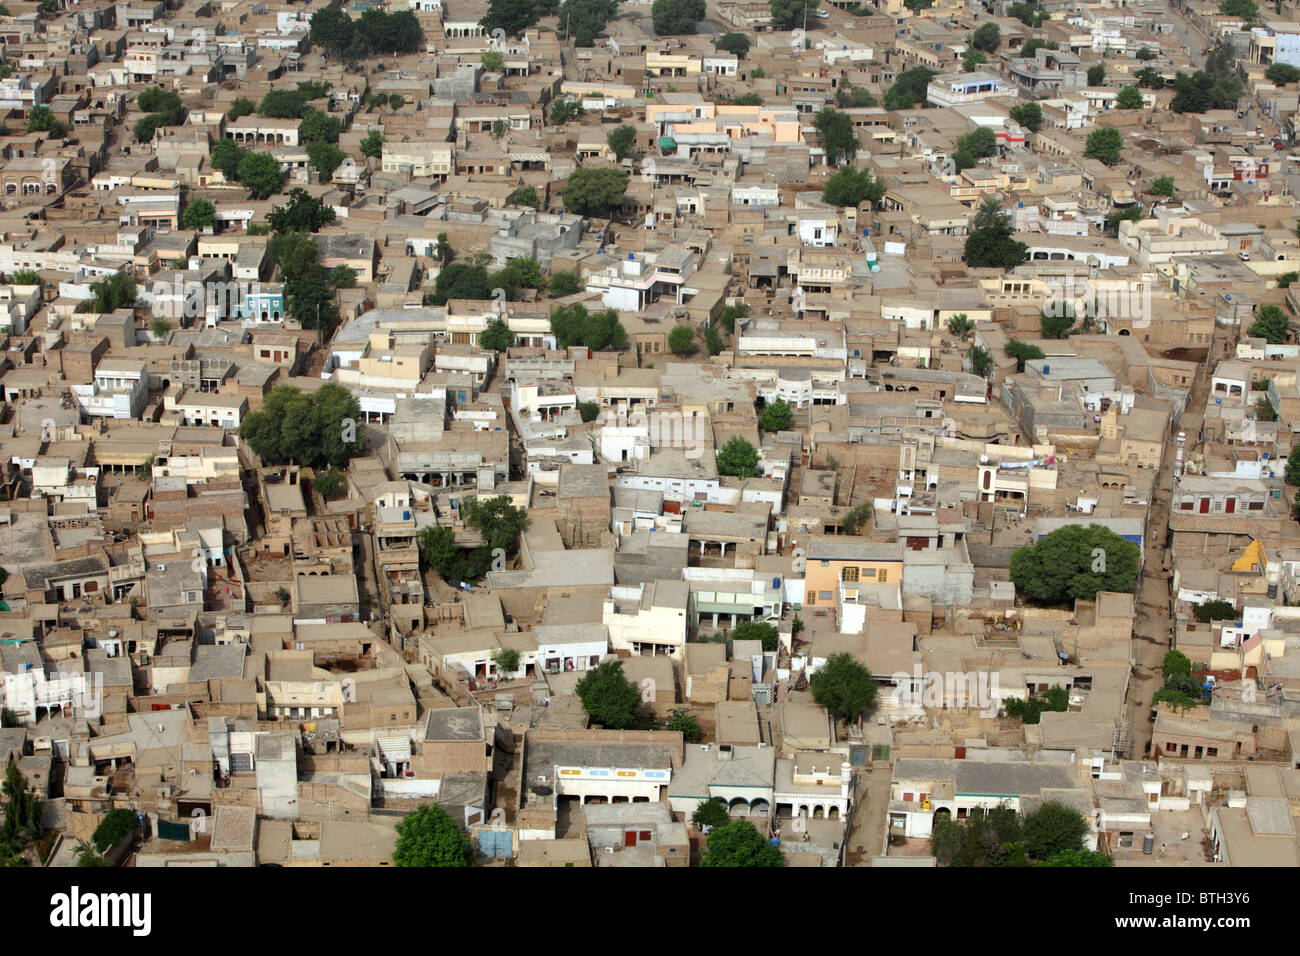 View of the city, Taunsa, Pakistan Stock Photo